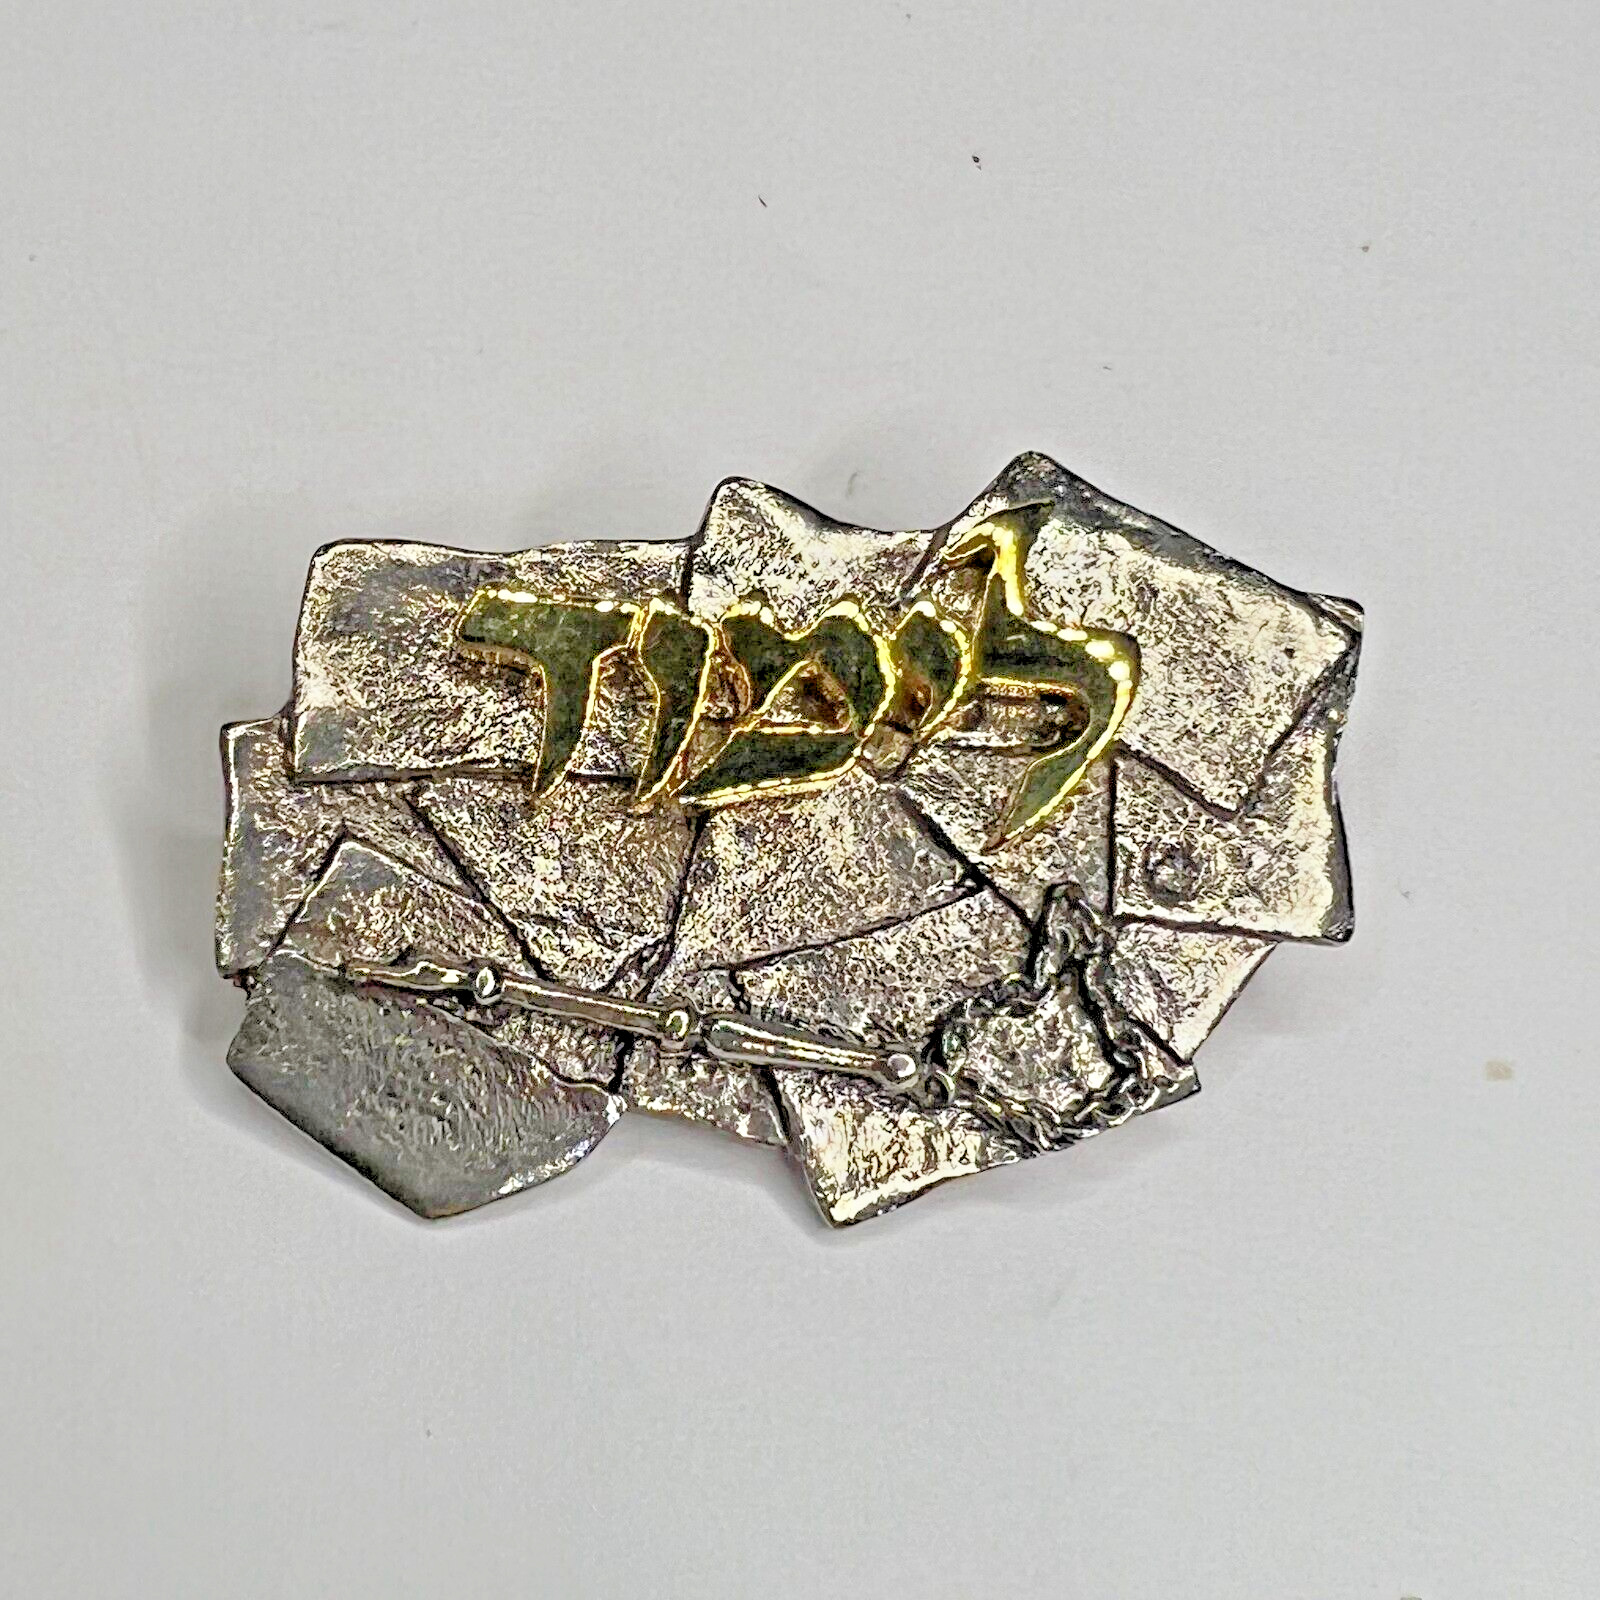 Vintage Signed Eytan Limud Jewish Silver & Gold Tone Brooch/Pin Pendant 2003-04